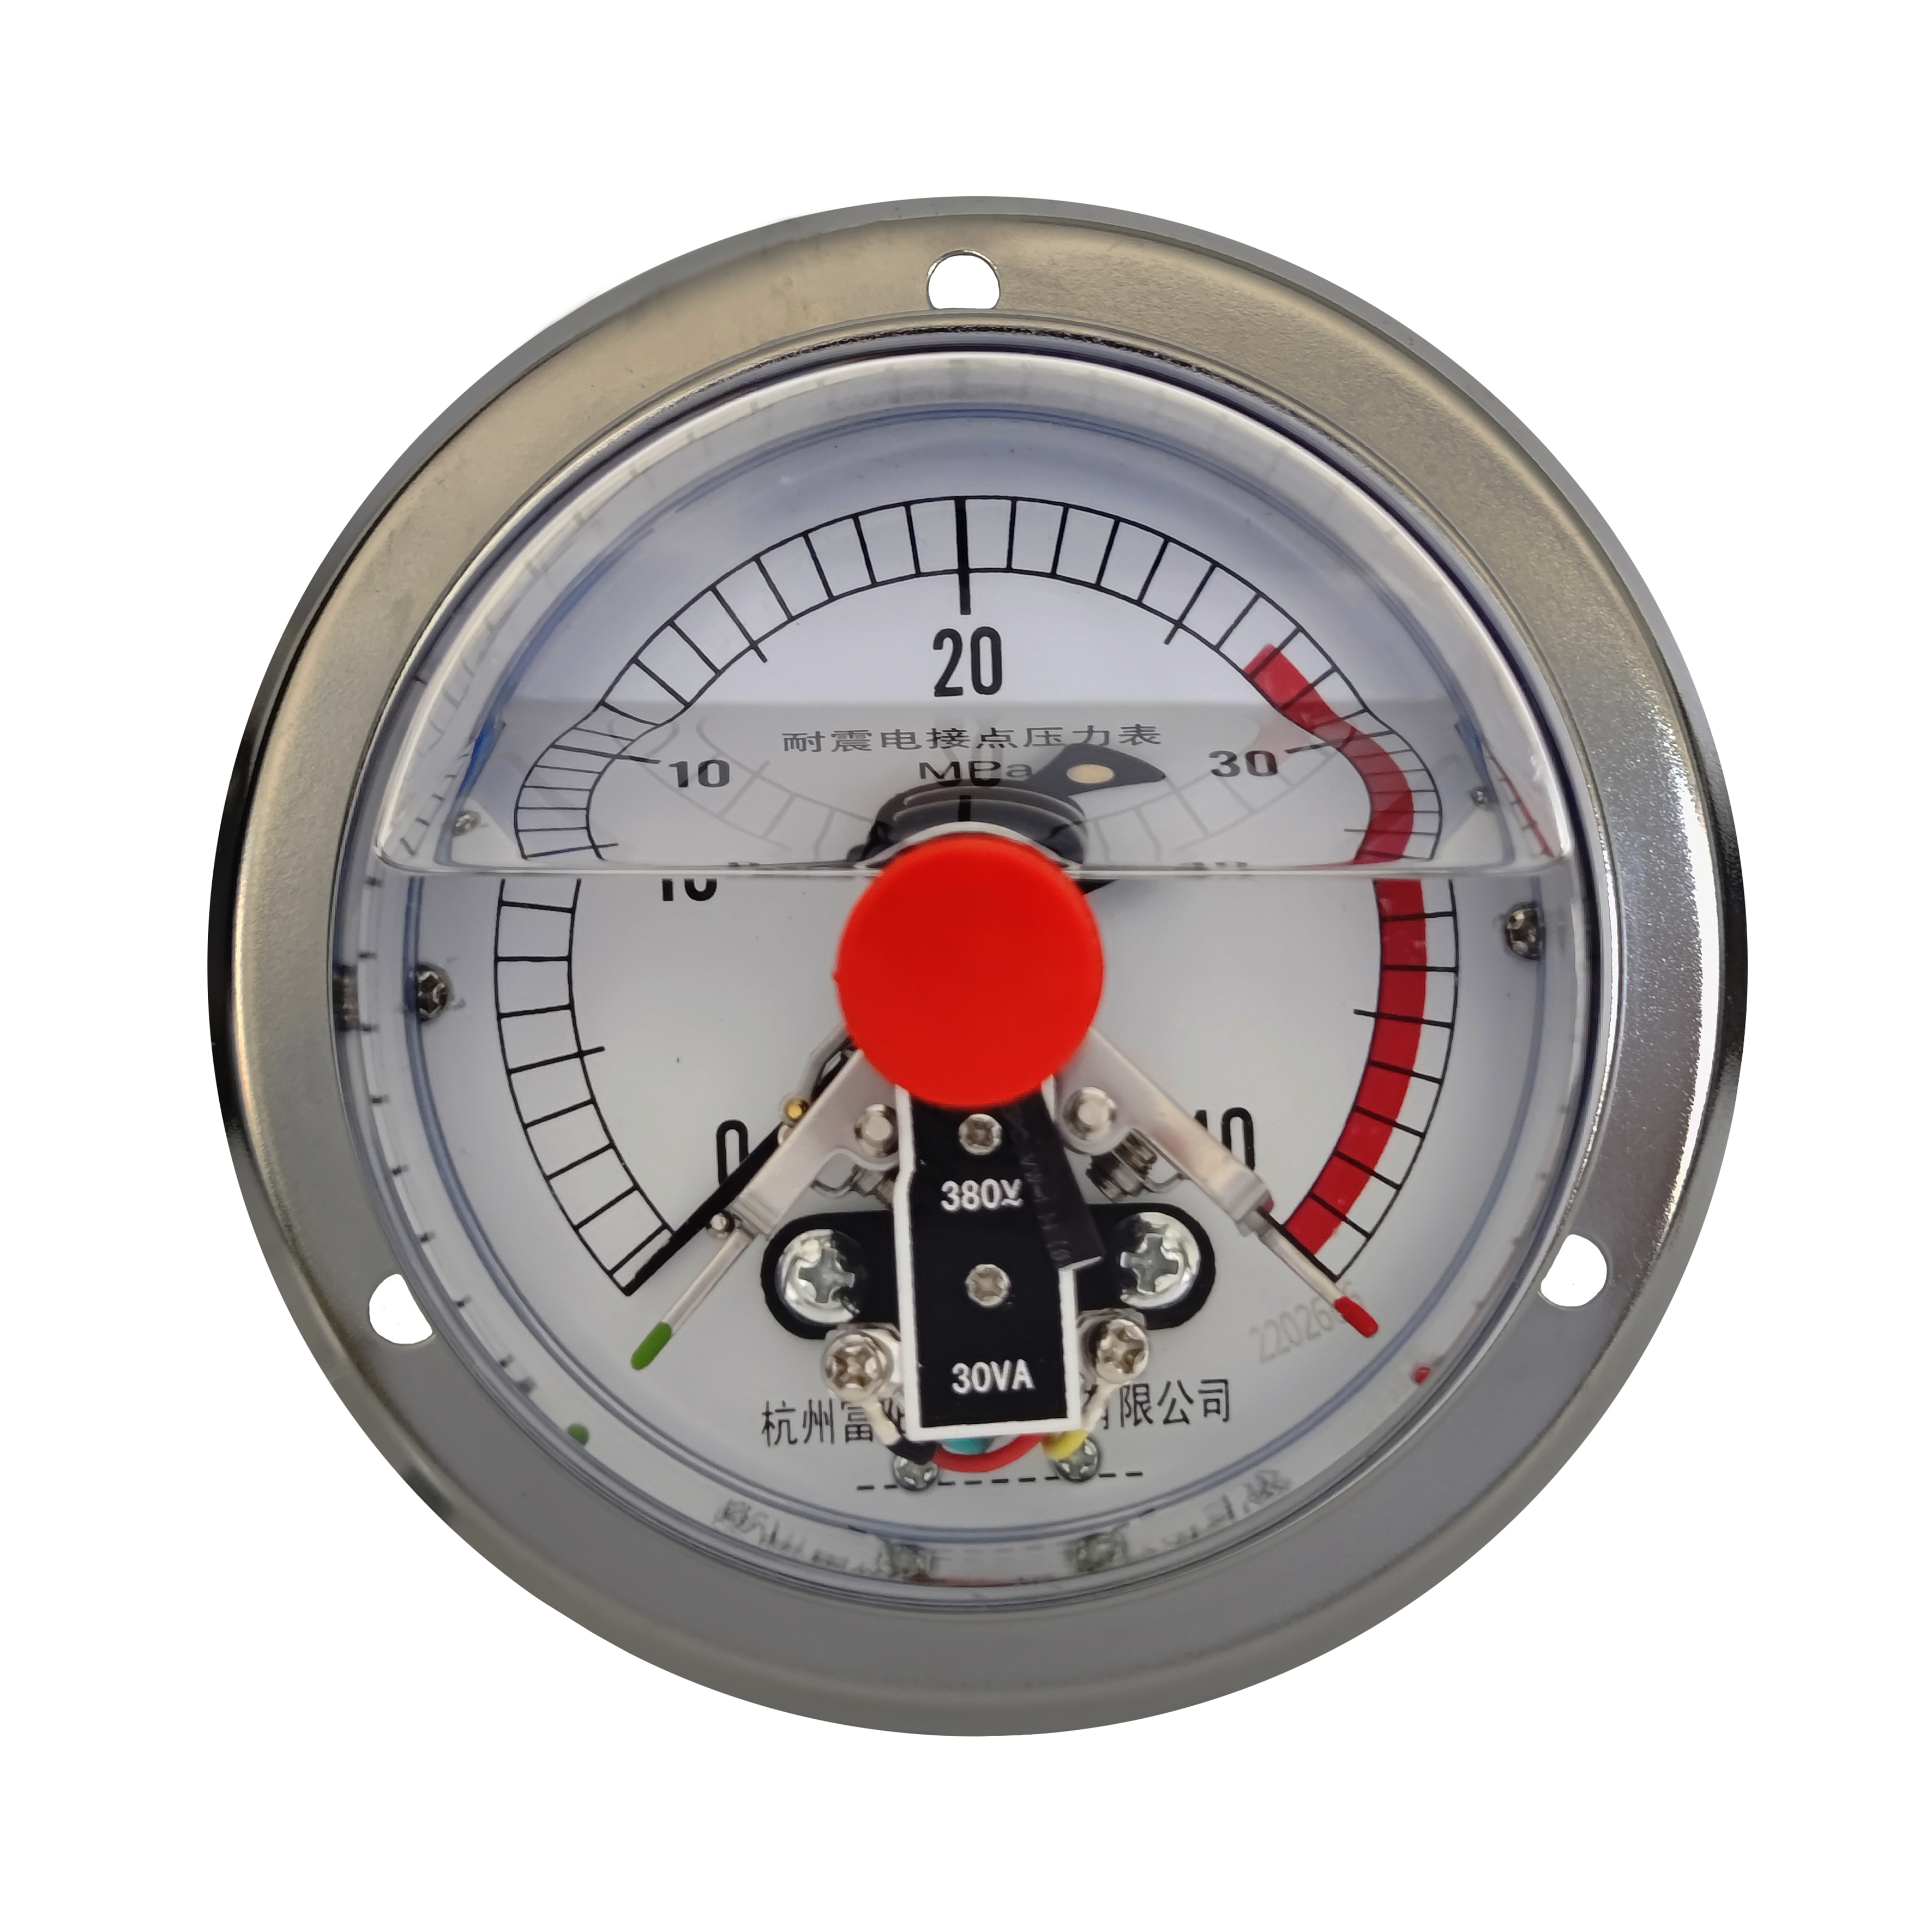 YNXC100ZT electric contact pressure gauge